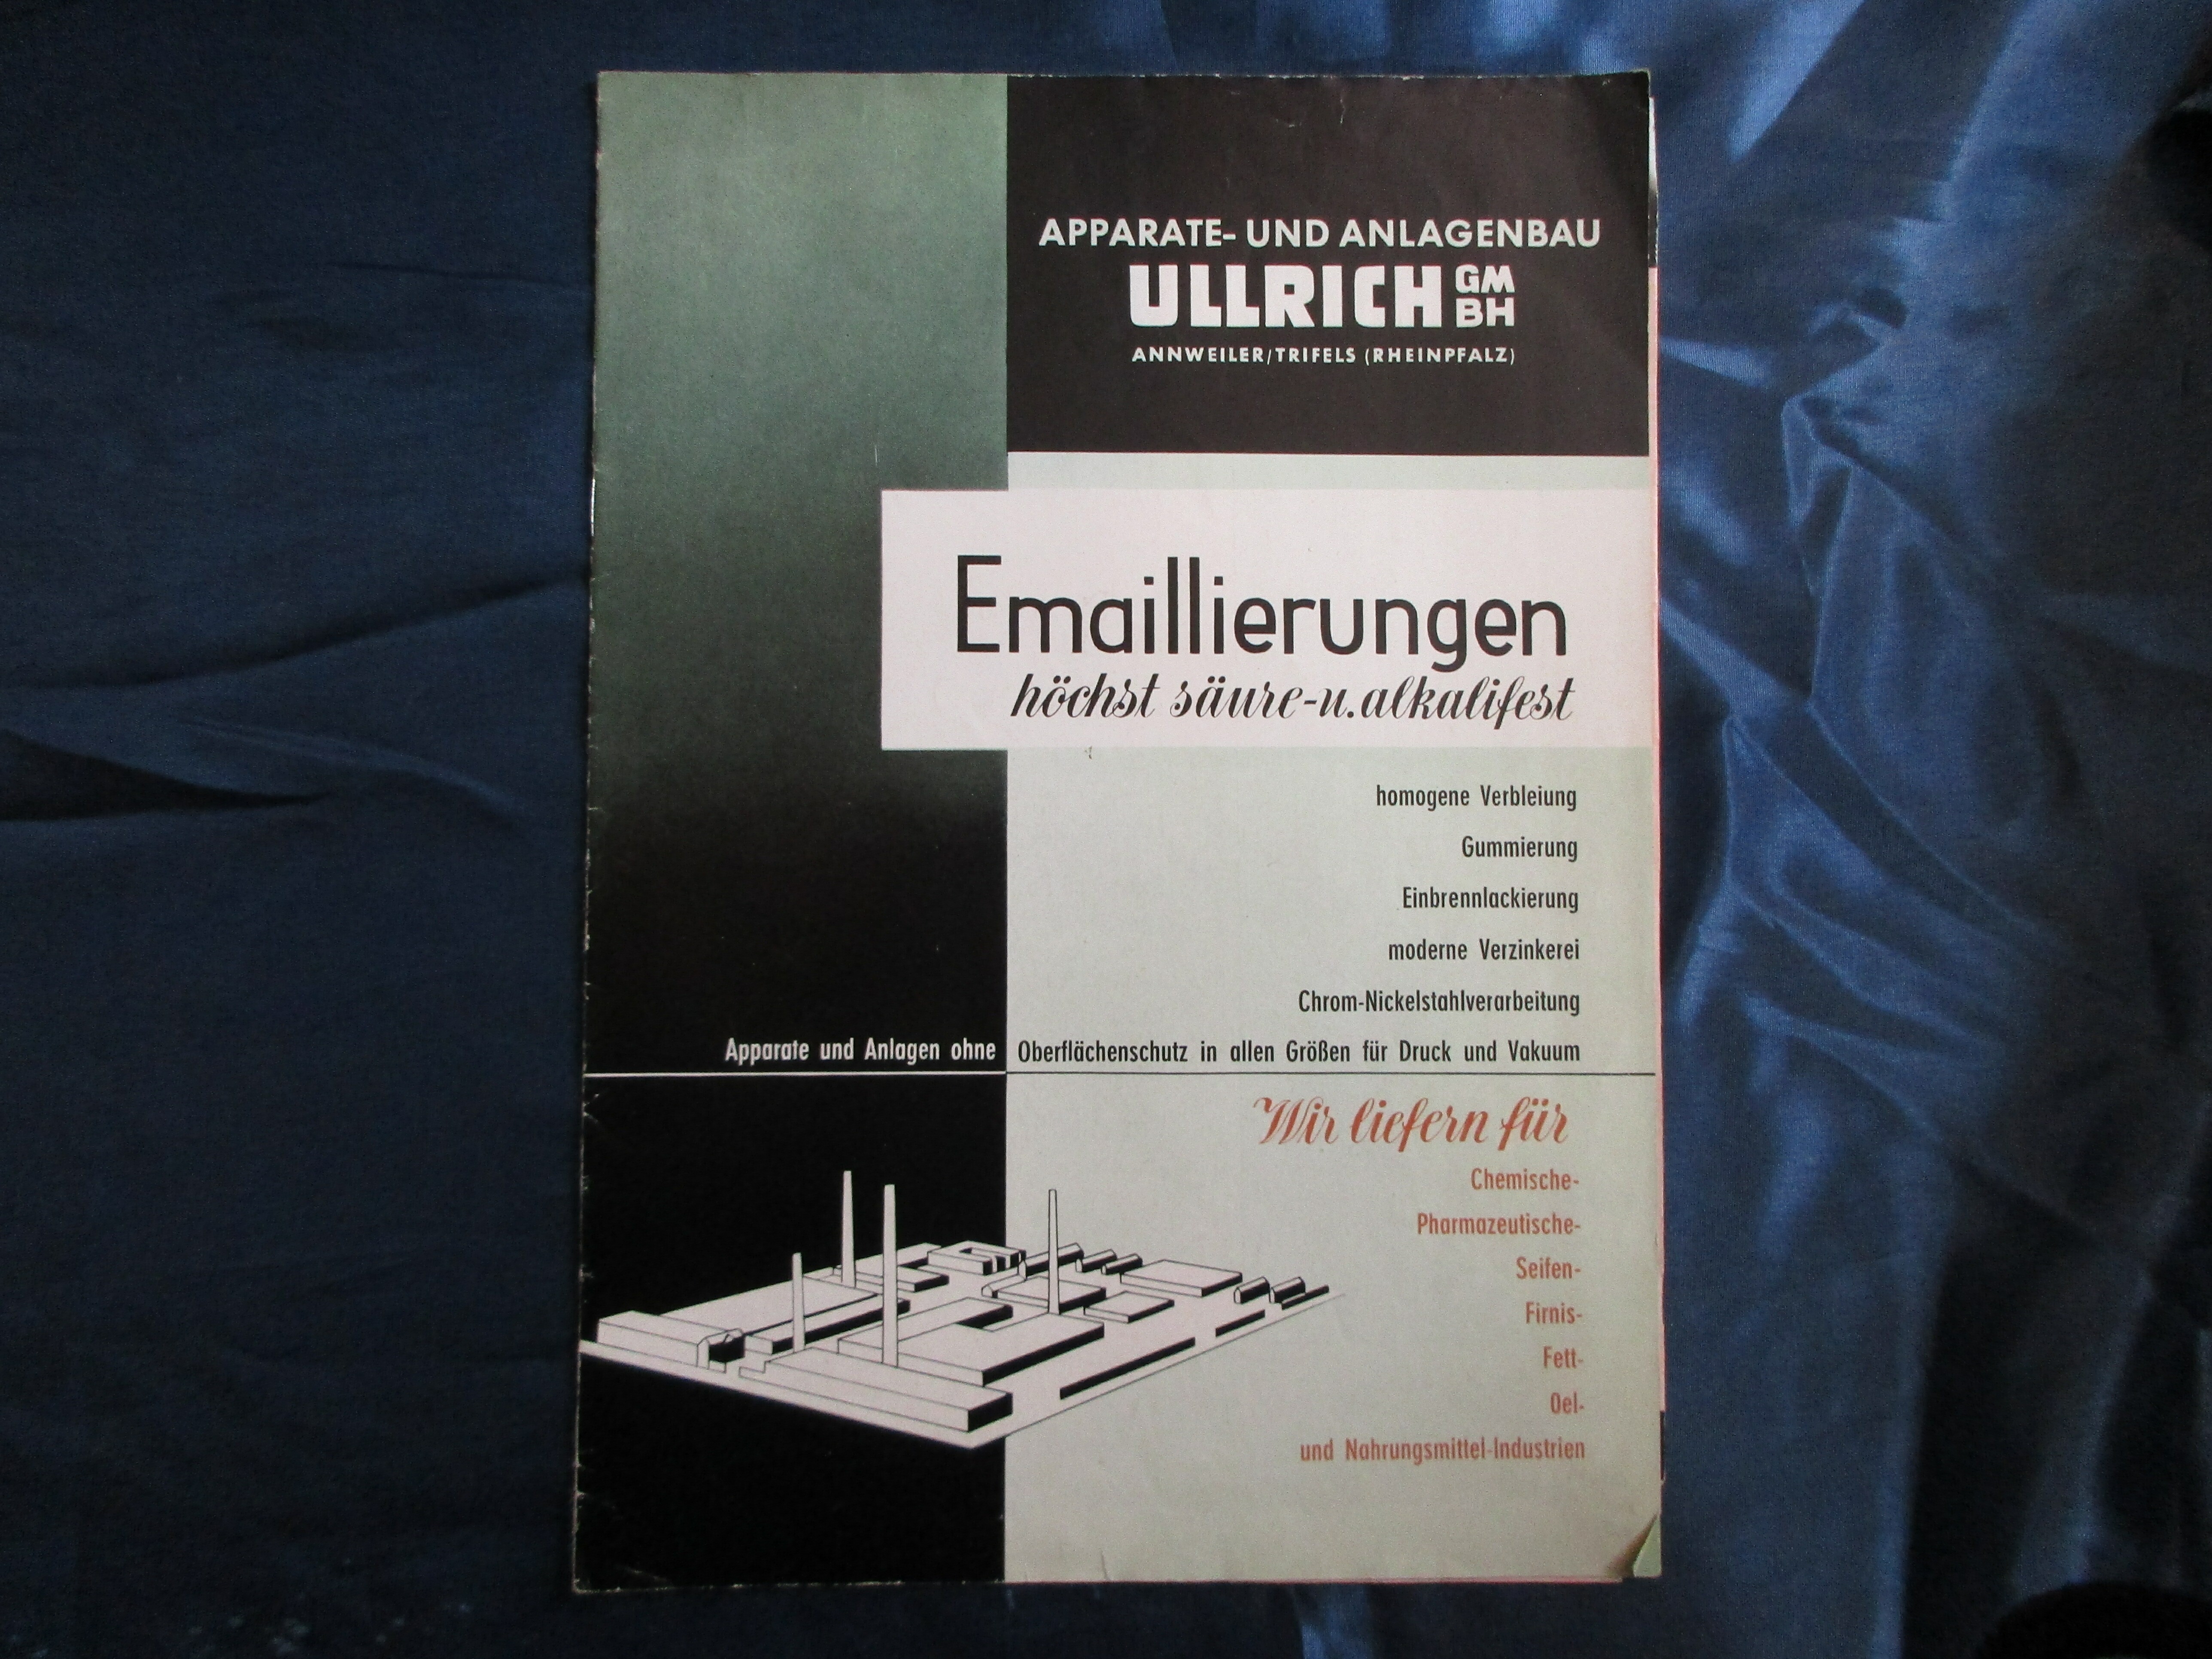 „Apparate- und Anlagenbau Ullrich GmbH Annweiler" (Museum unterm Trifels CC BY-NC-SA)